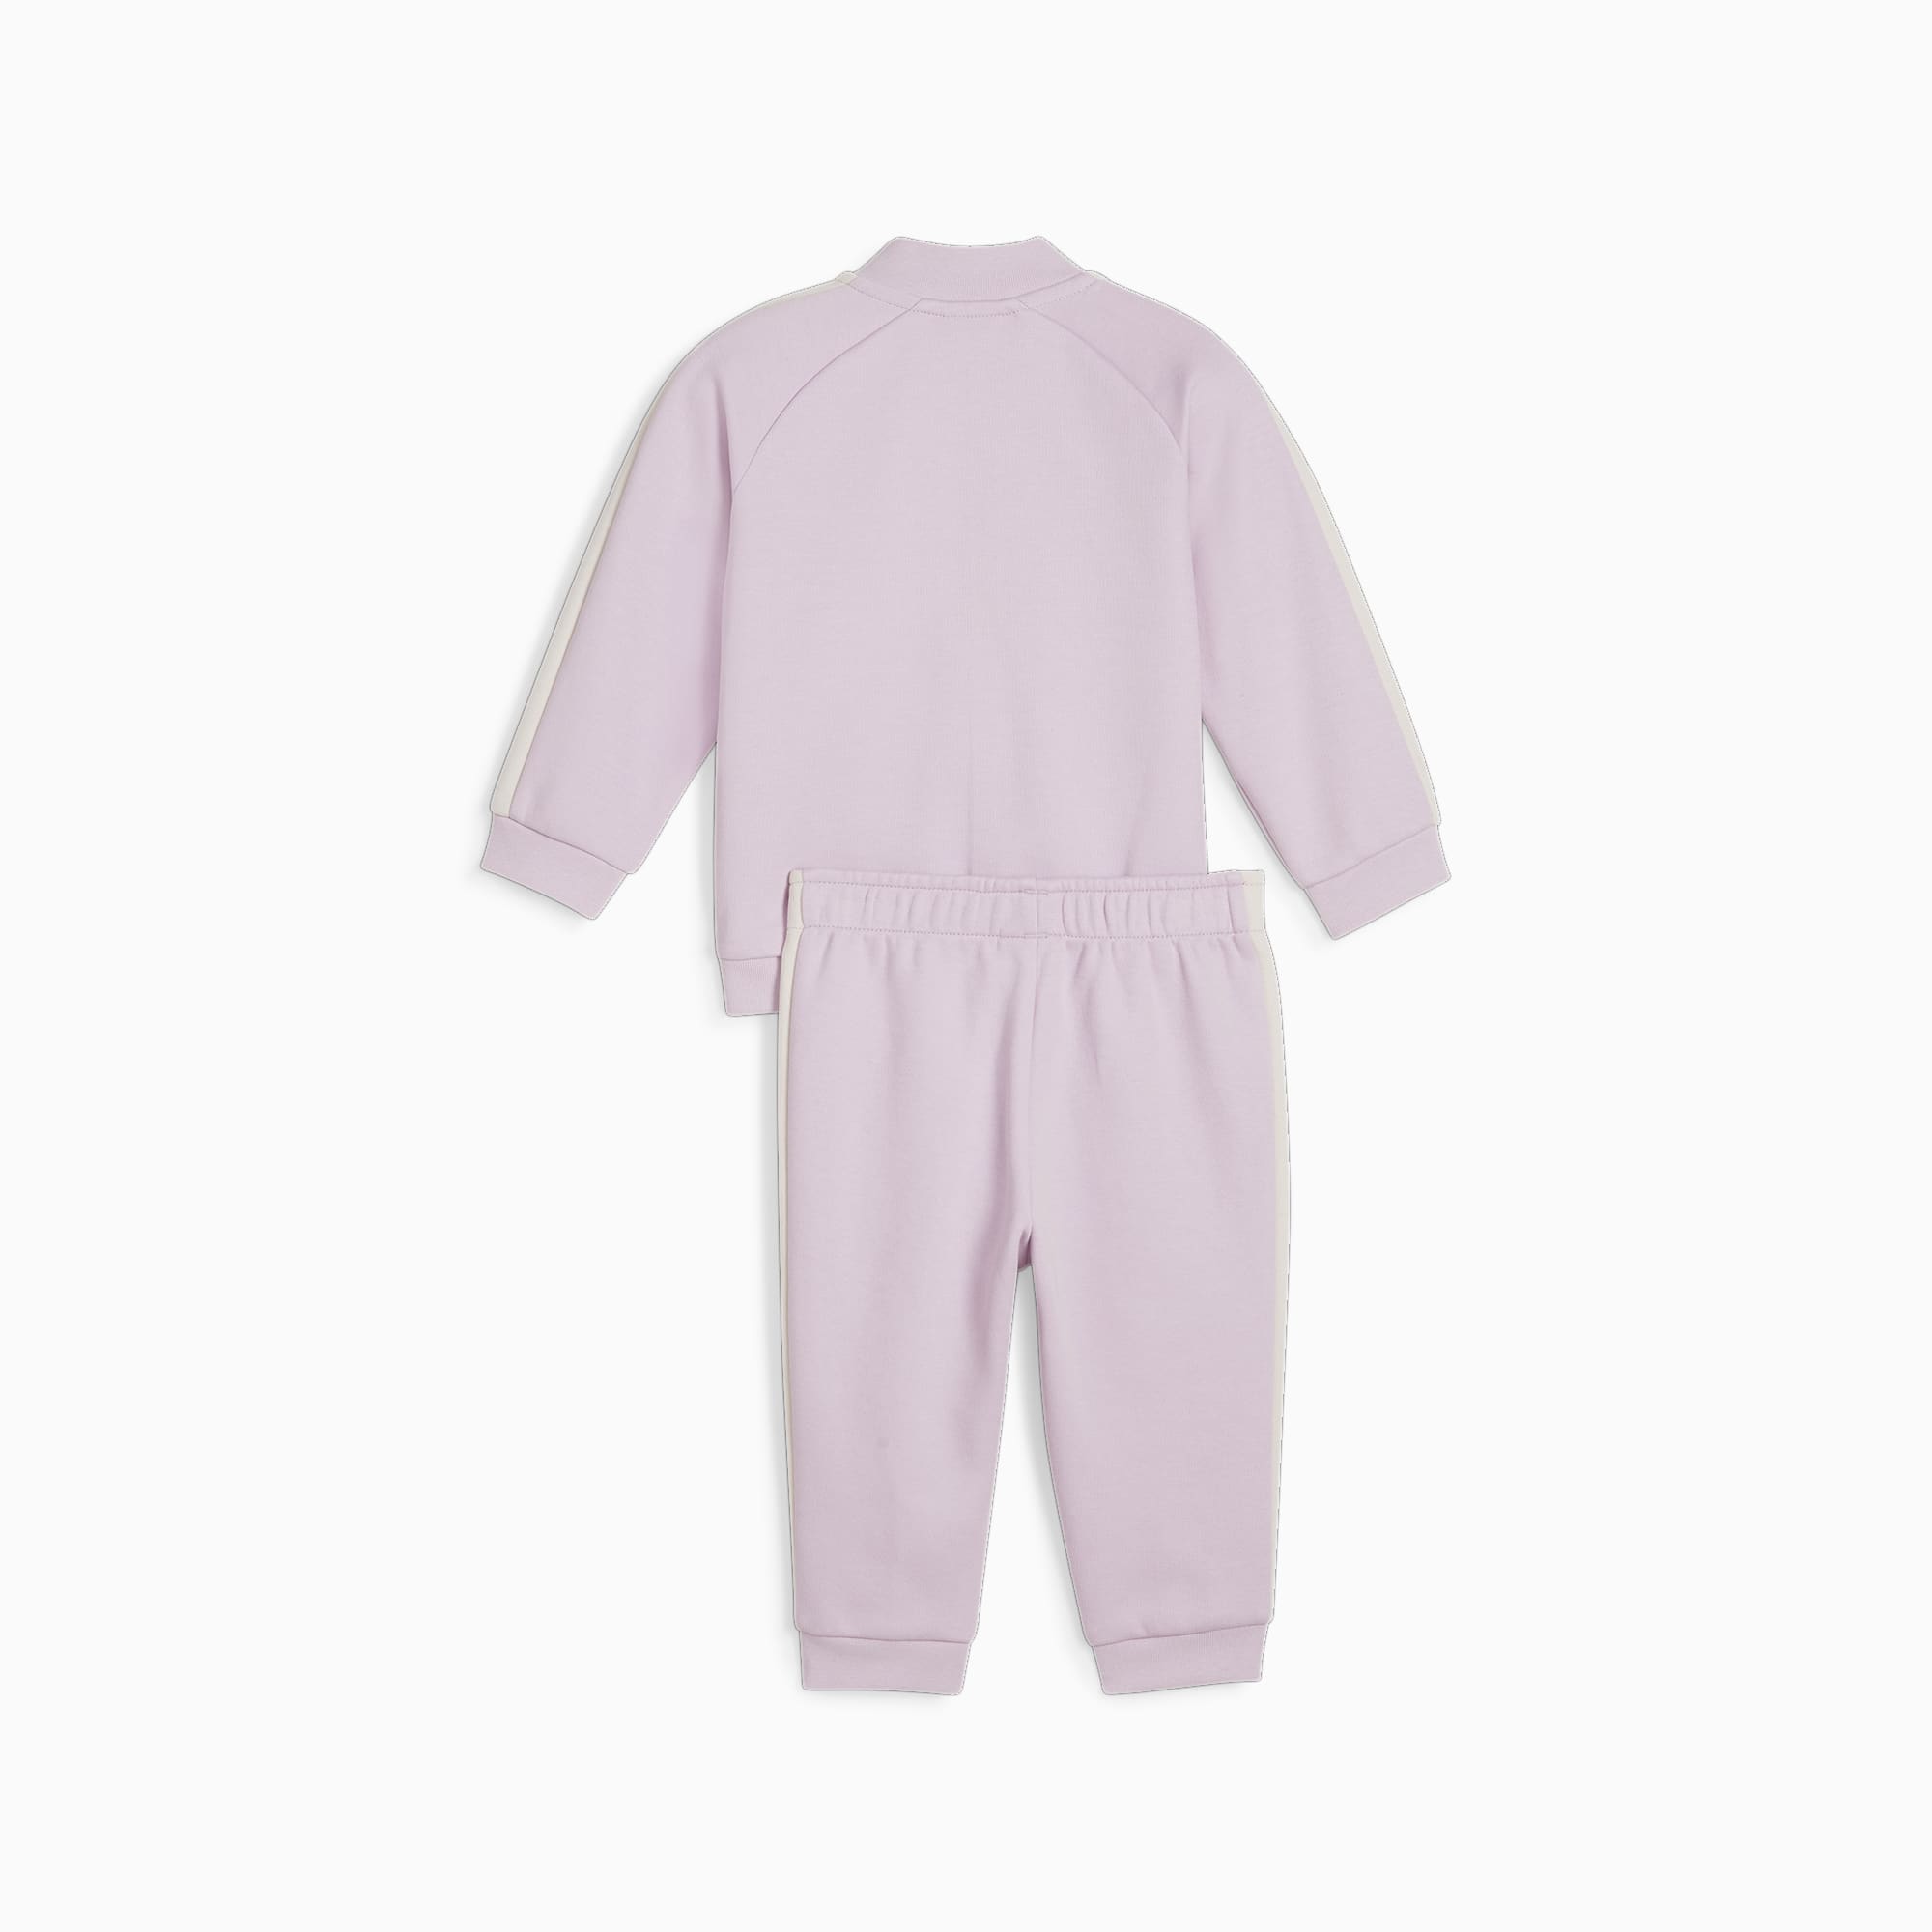 PUMA MINICATS T7 ICONIC Trainingsanzug Baby Für Kinder, Lila, Größe: 86, Kleidung